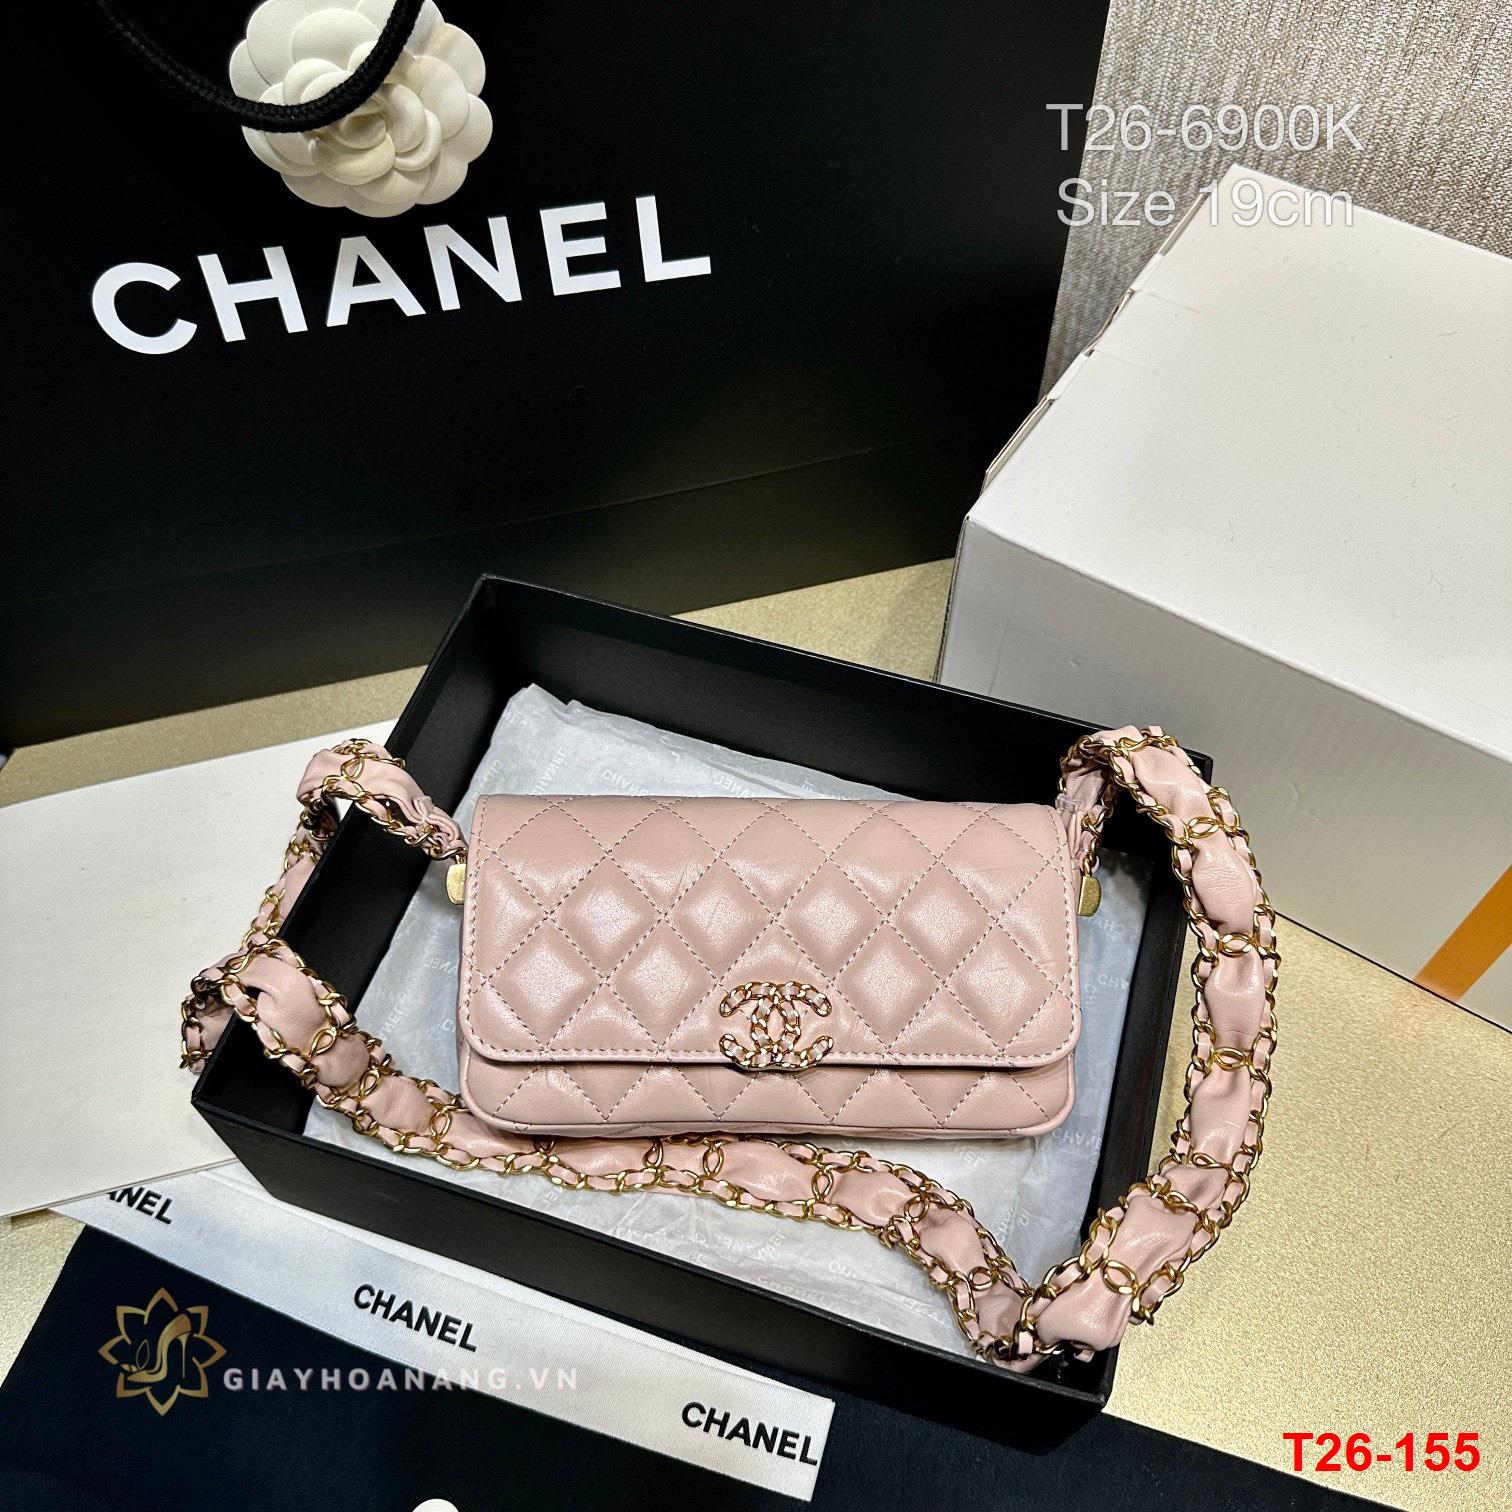 T26-155 Chanel túi siêu cấp size 19cm